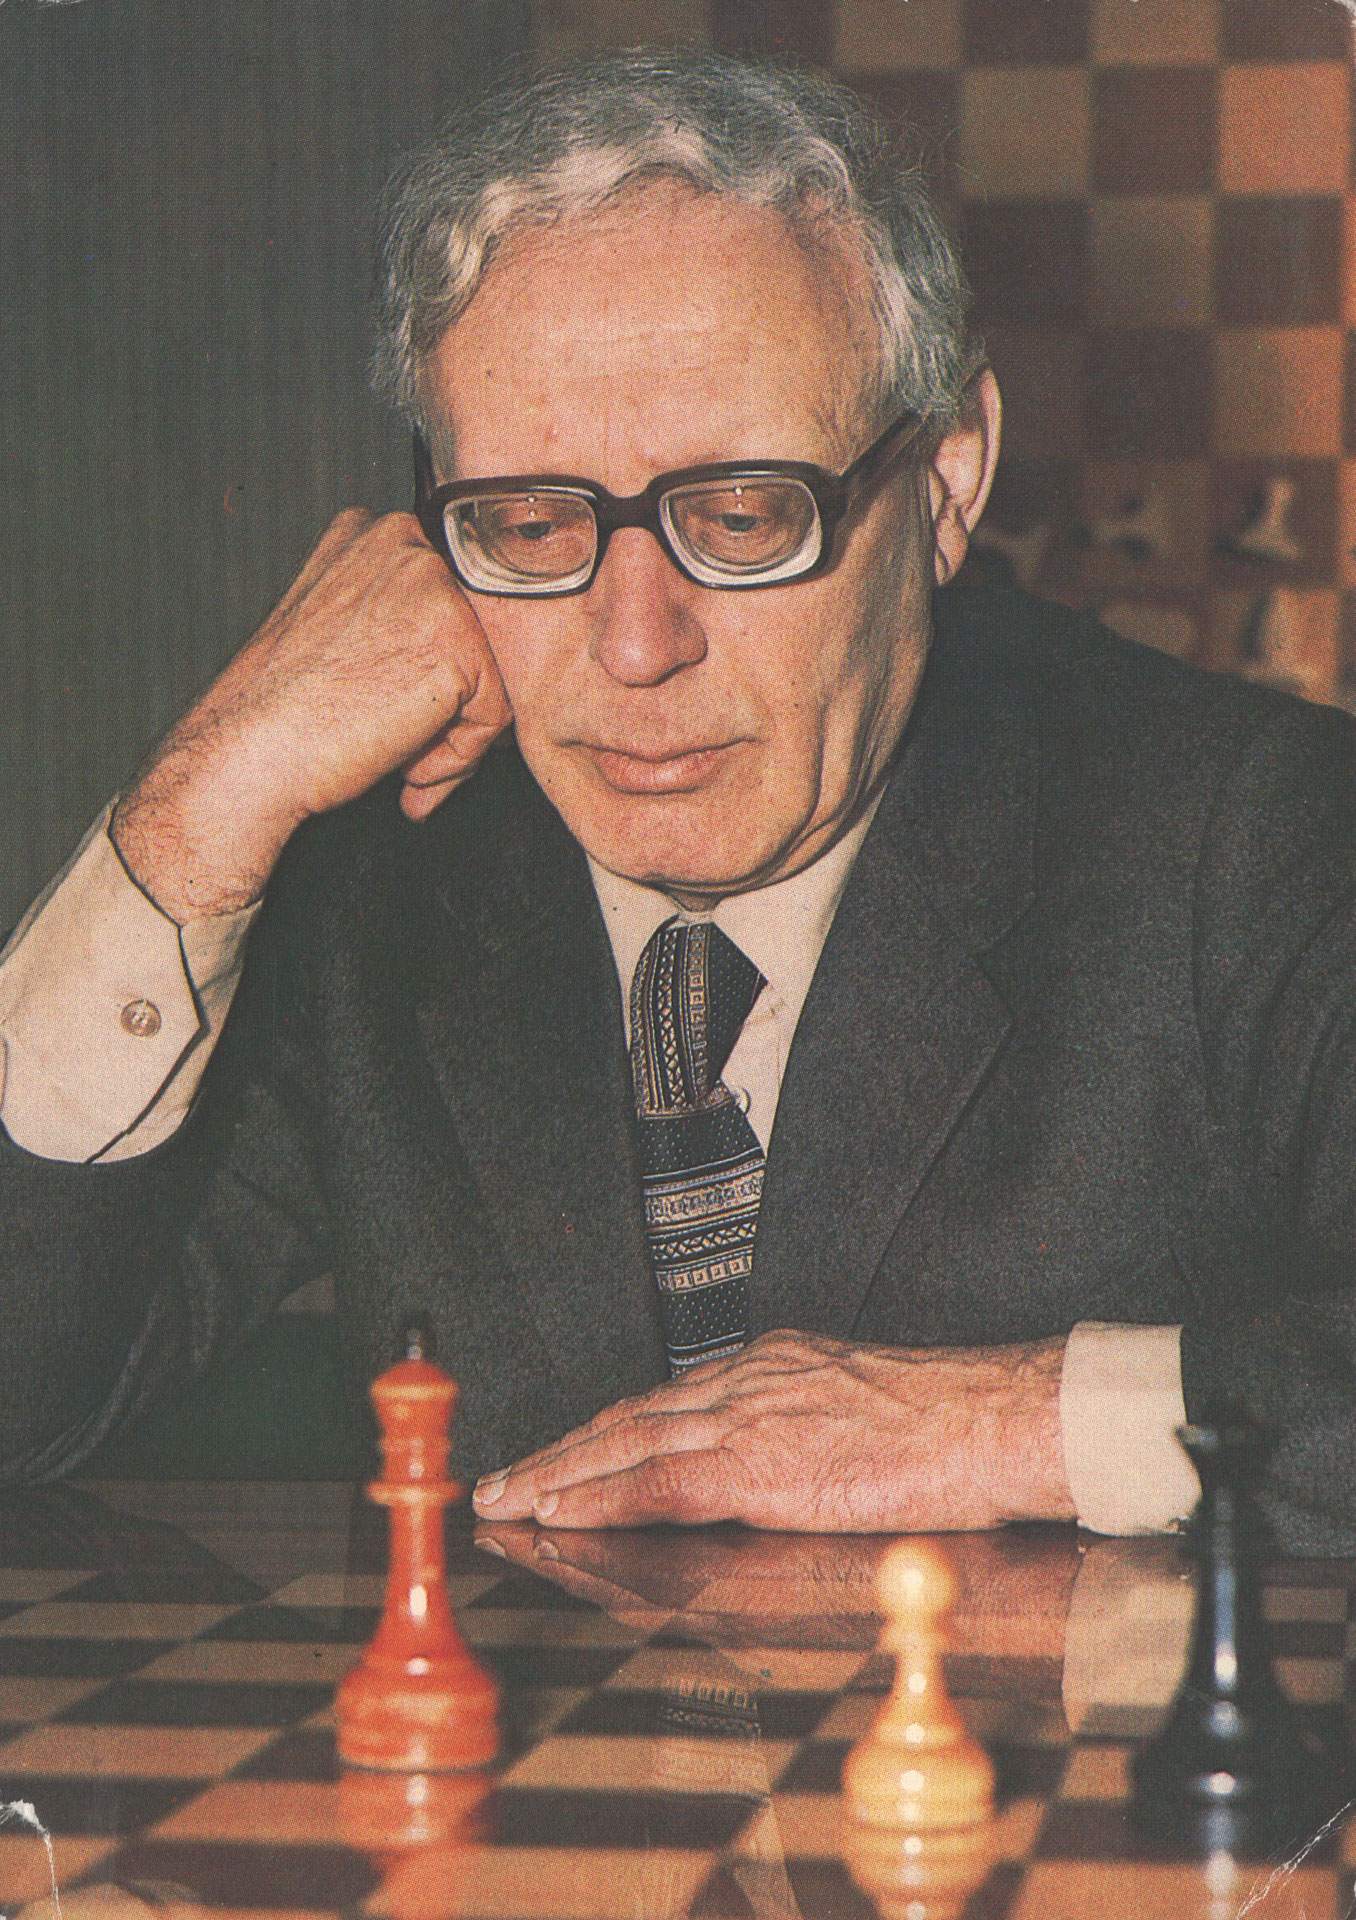 Mikhail Botvinnik - Sixth World Chess Champion 9781949859164